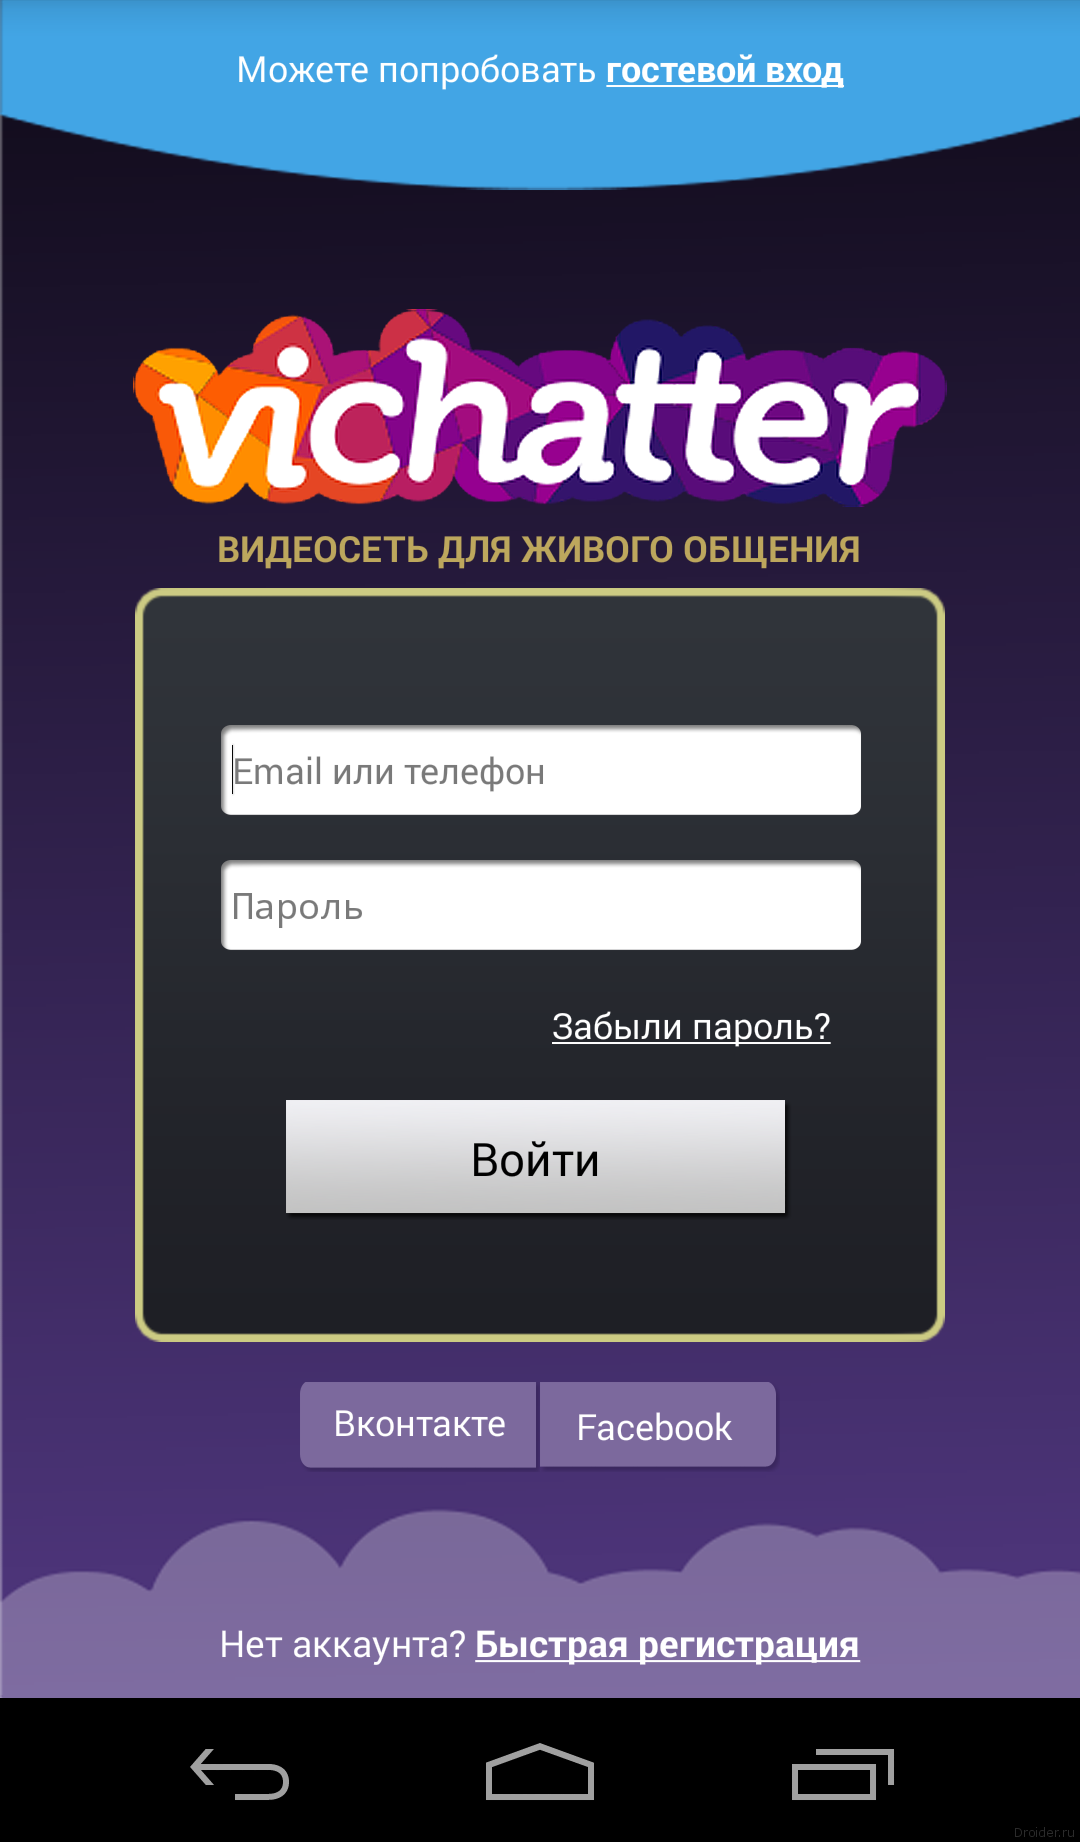 Vichatter - "таймкиллер" для экстравертов.